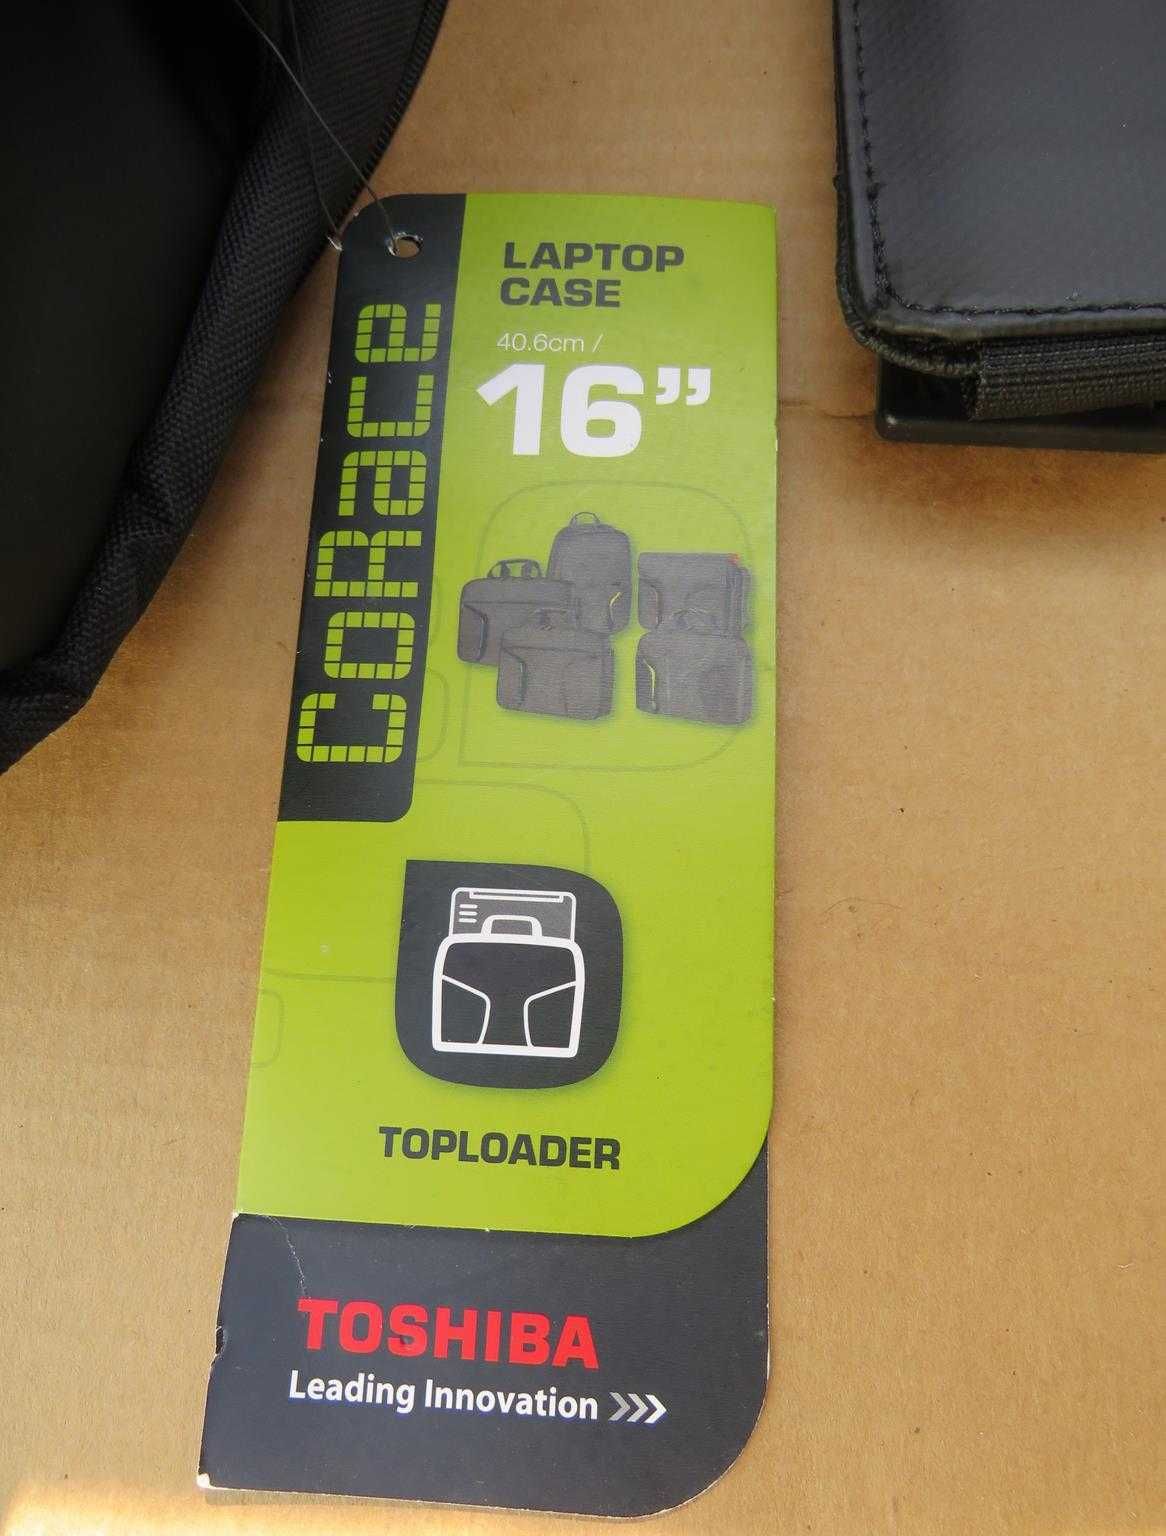 Mala para portátil até 16" (40,6cm) da Toshiba Modelo Corace. NOVO